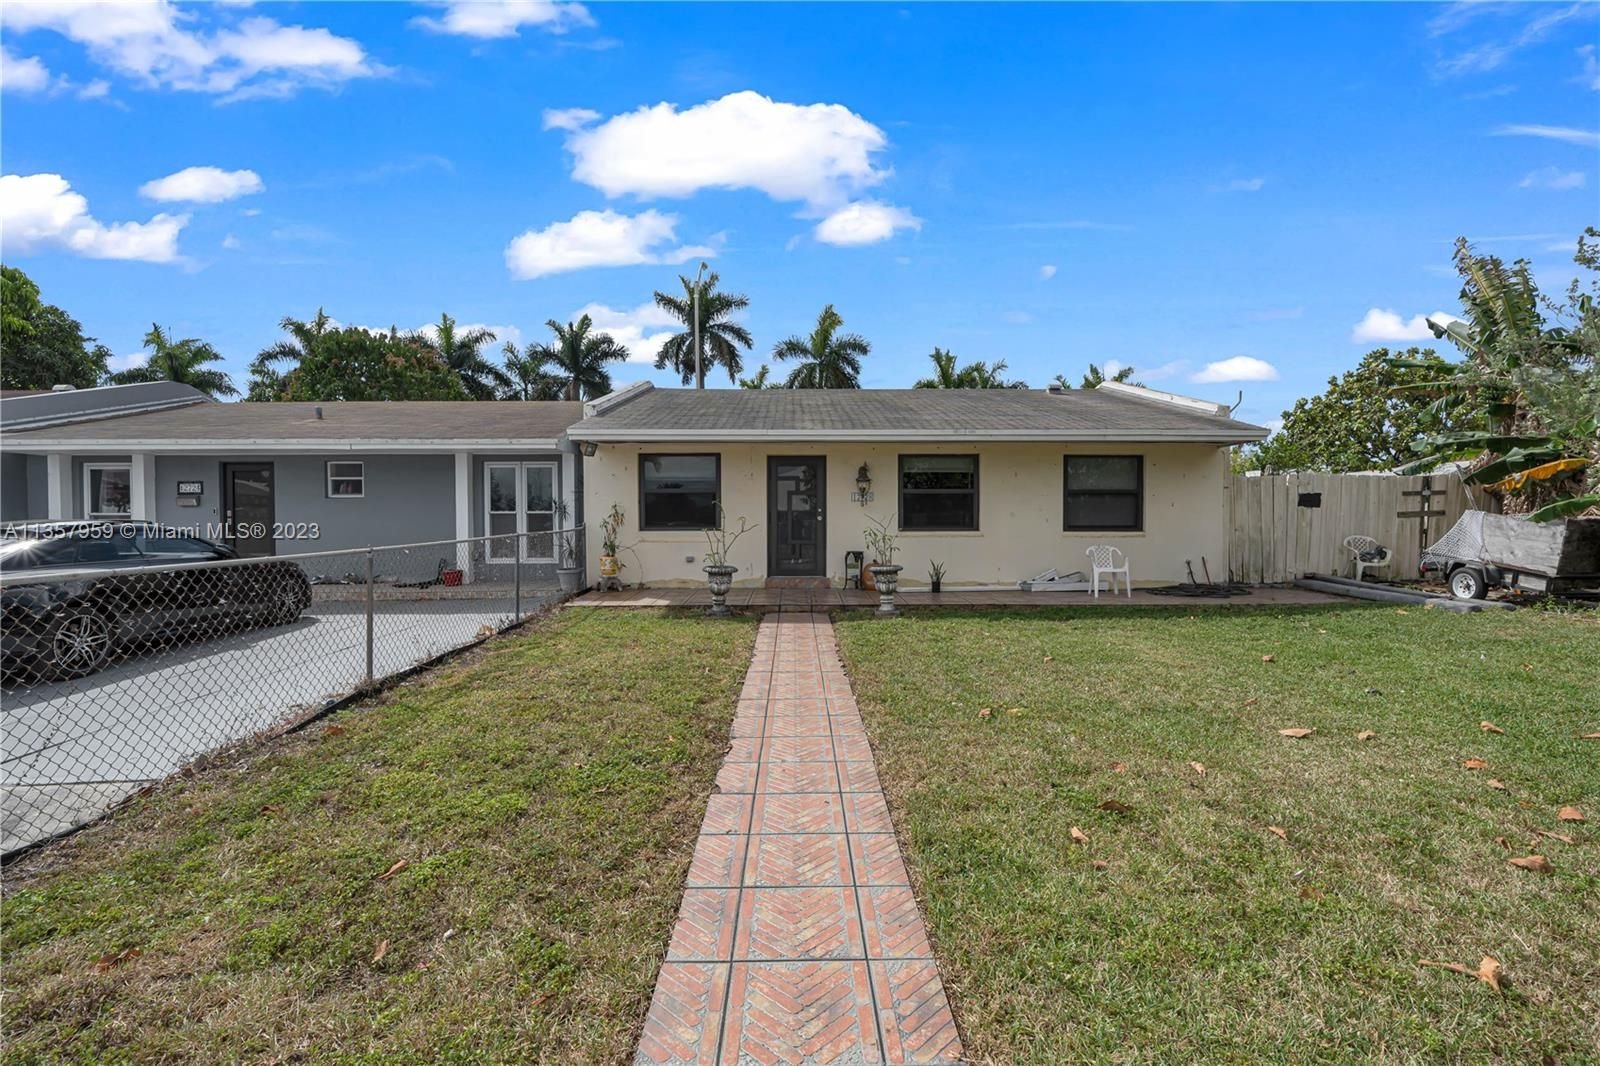 Real estate property located at 12728 55th St #0, Miami-Dade County, Miami, FL